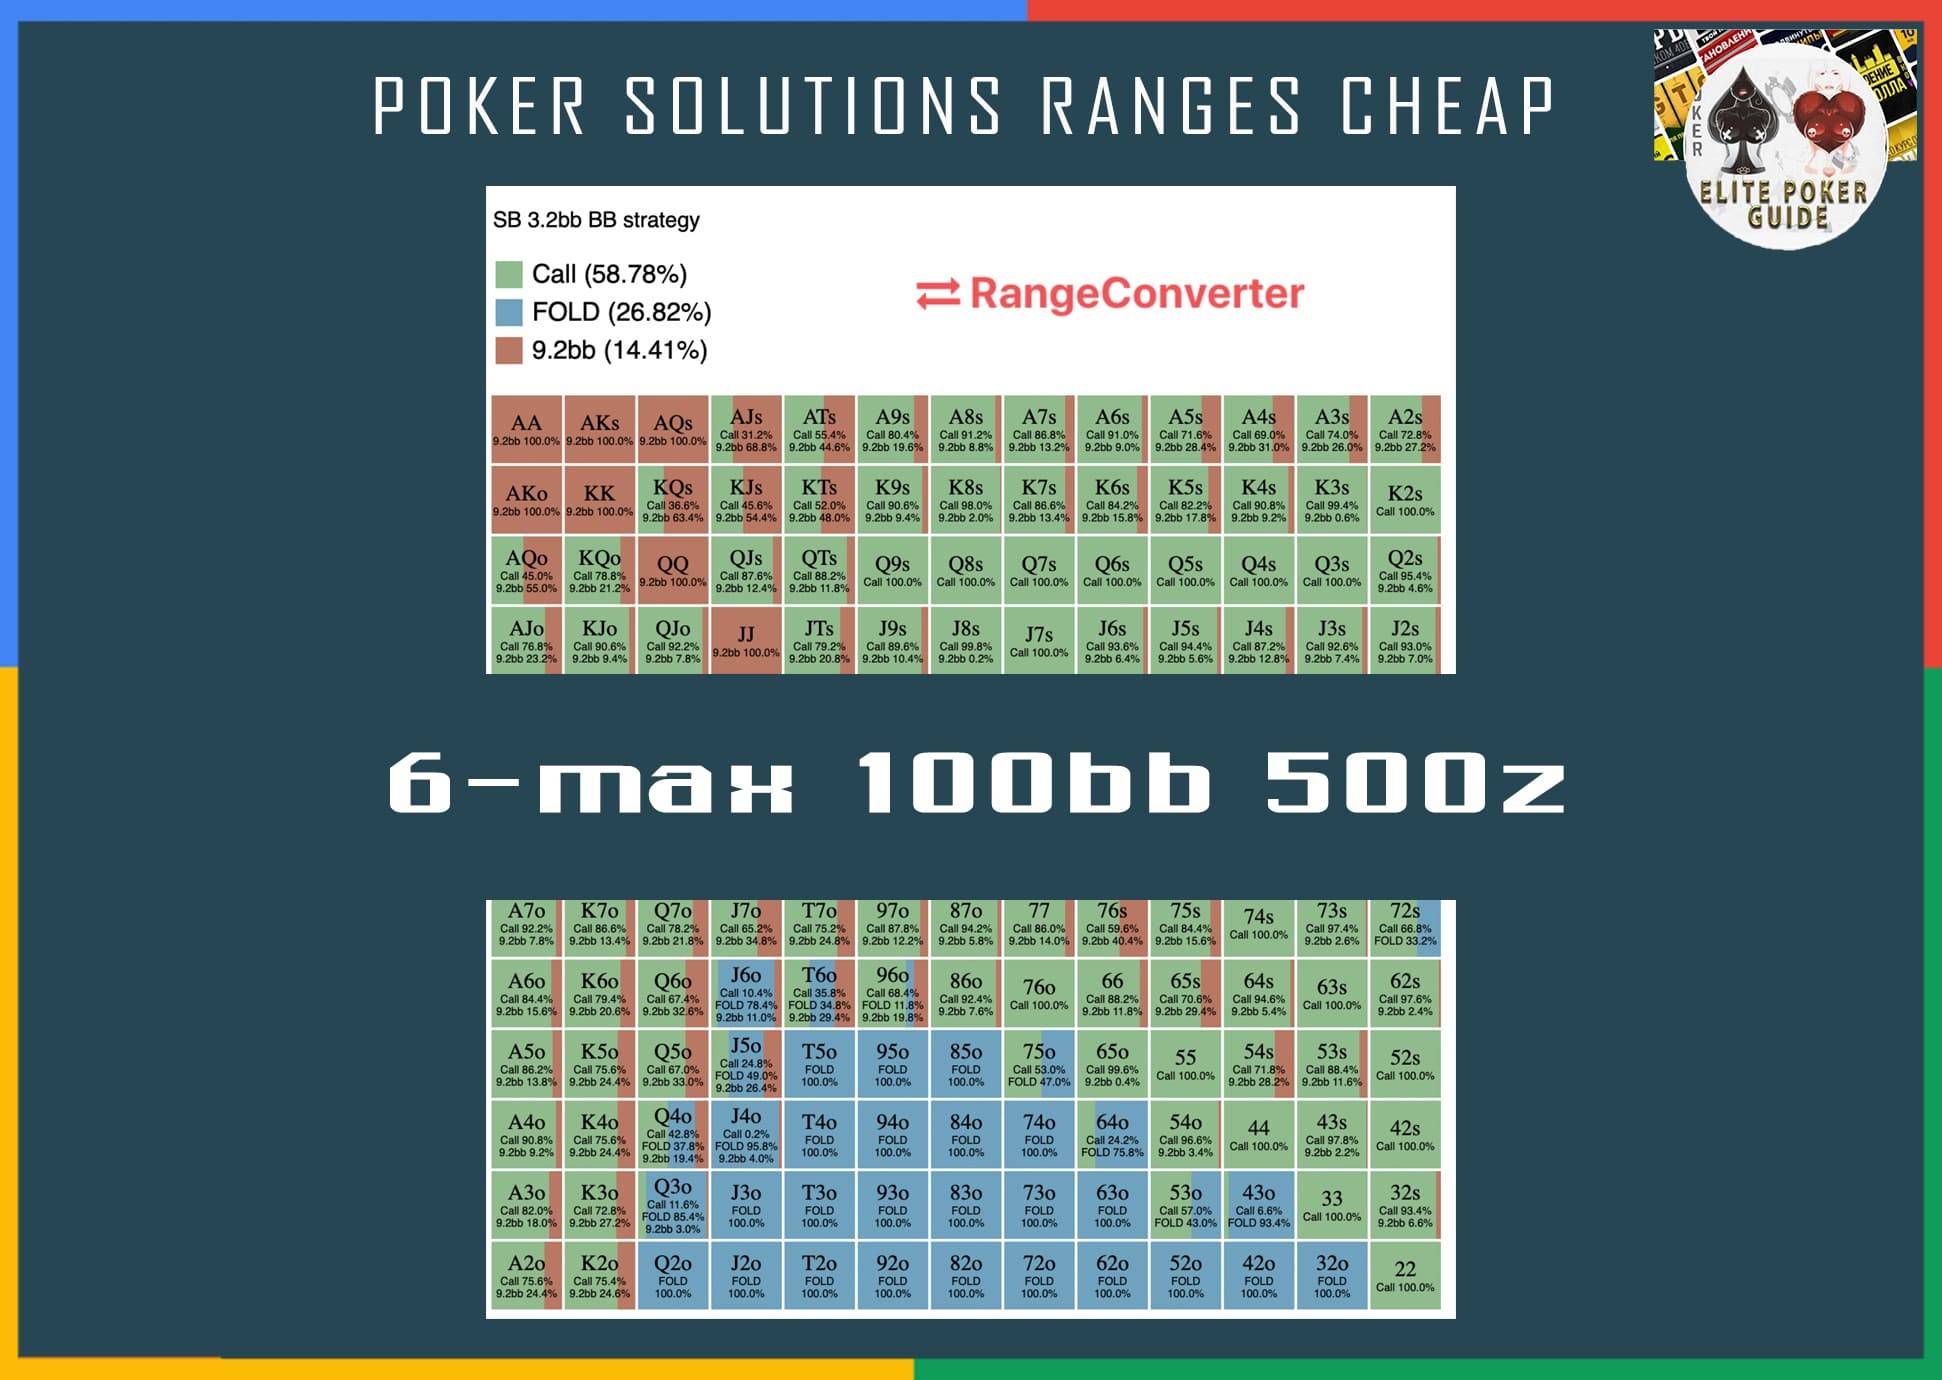 RANGECONVERTER 6-MAX 100BB 500Z AS PREFLOP SOLUTION IMAGES Cheap